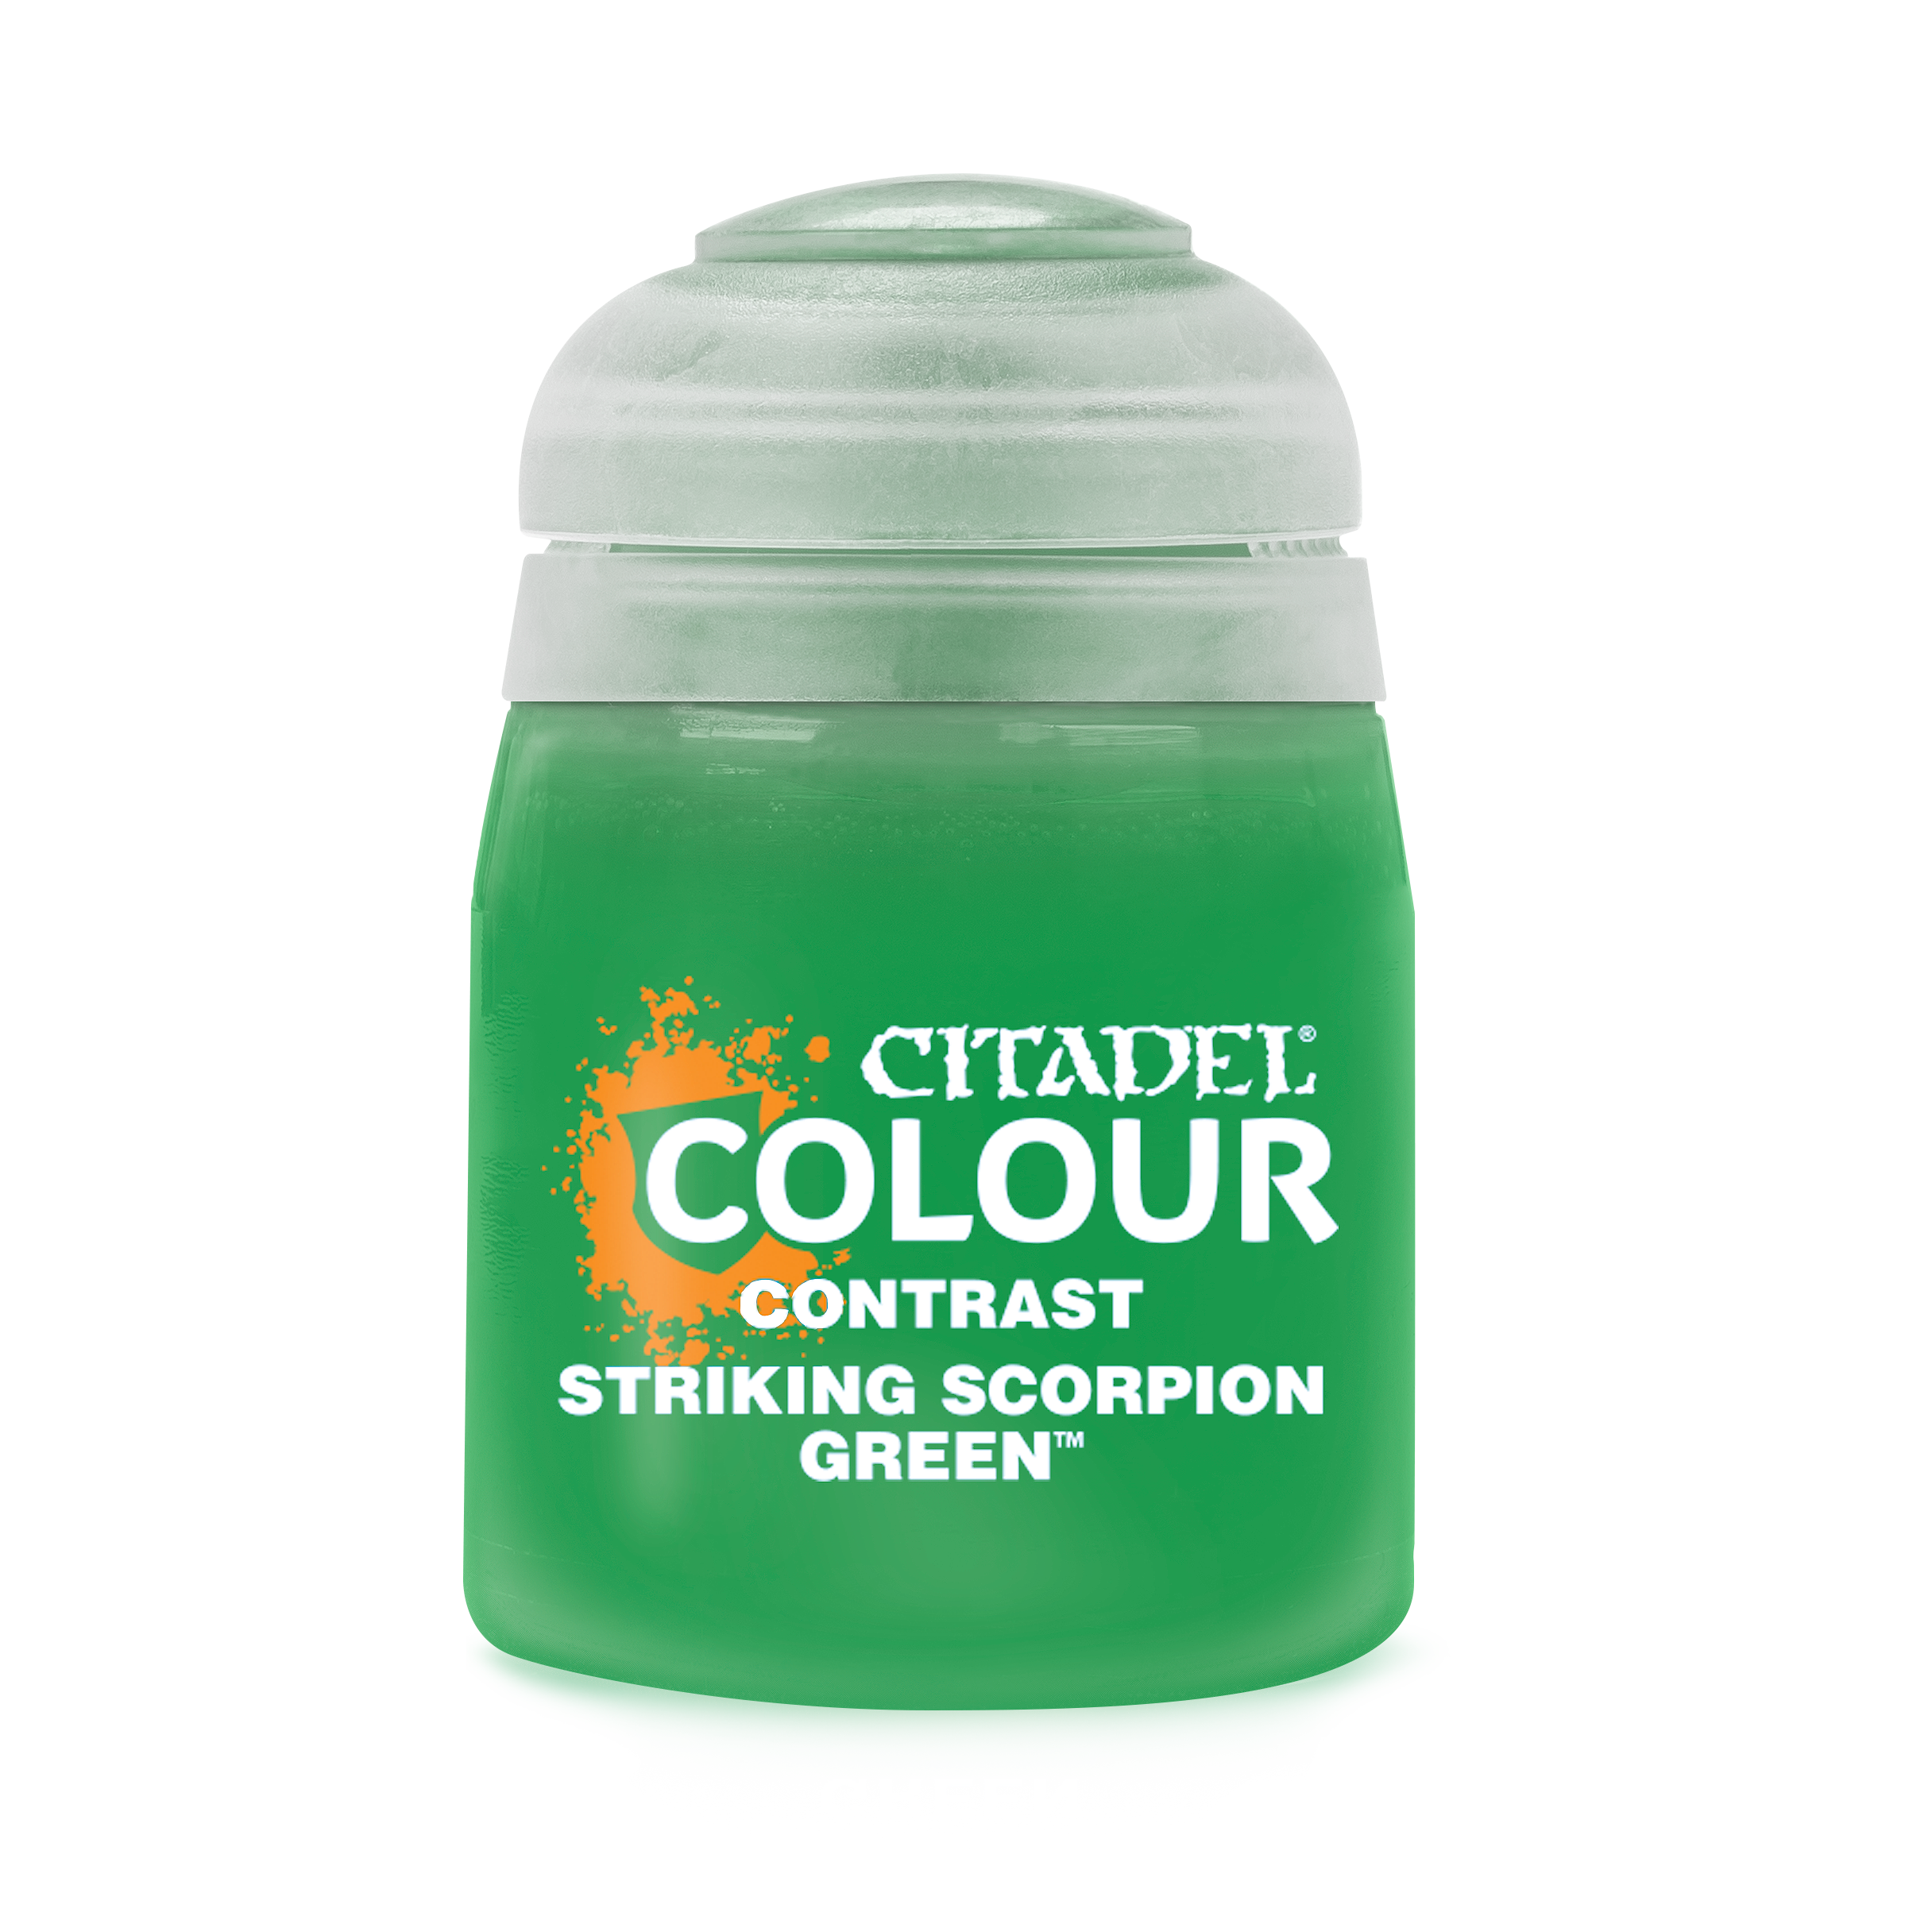 Contrast Striking Scorpion Green - Citadel Colour